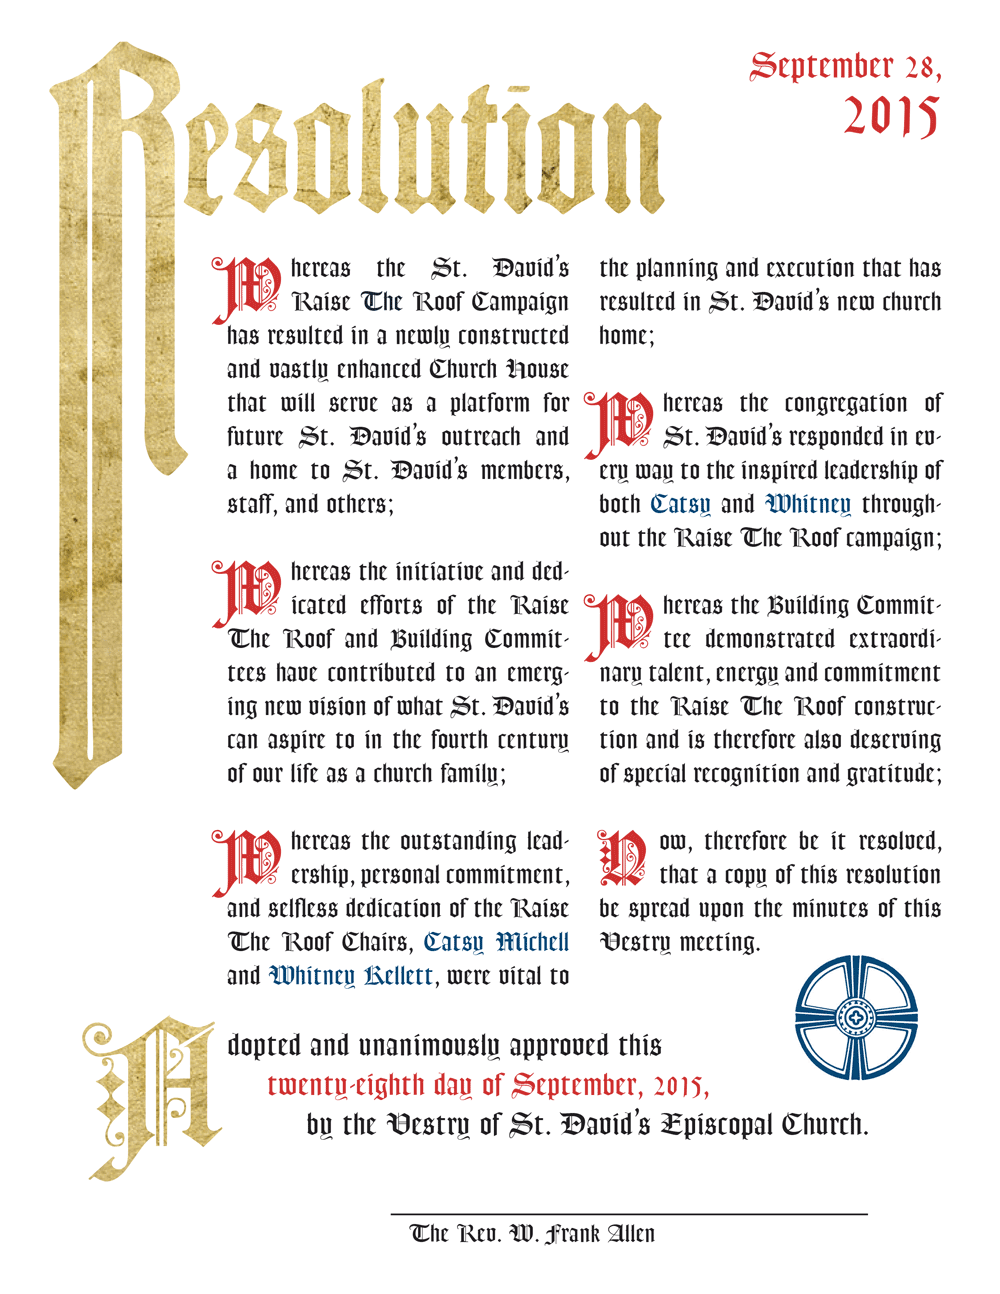 St. David's resolution